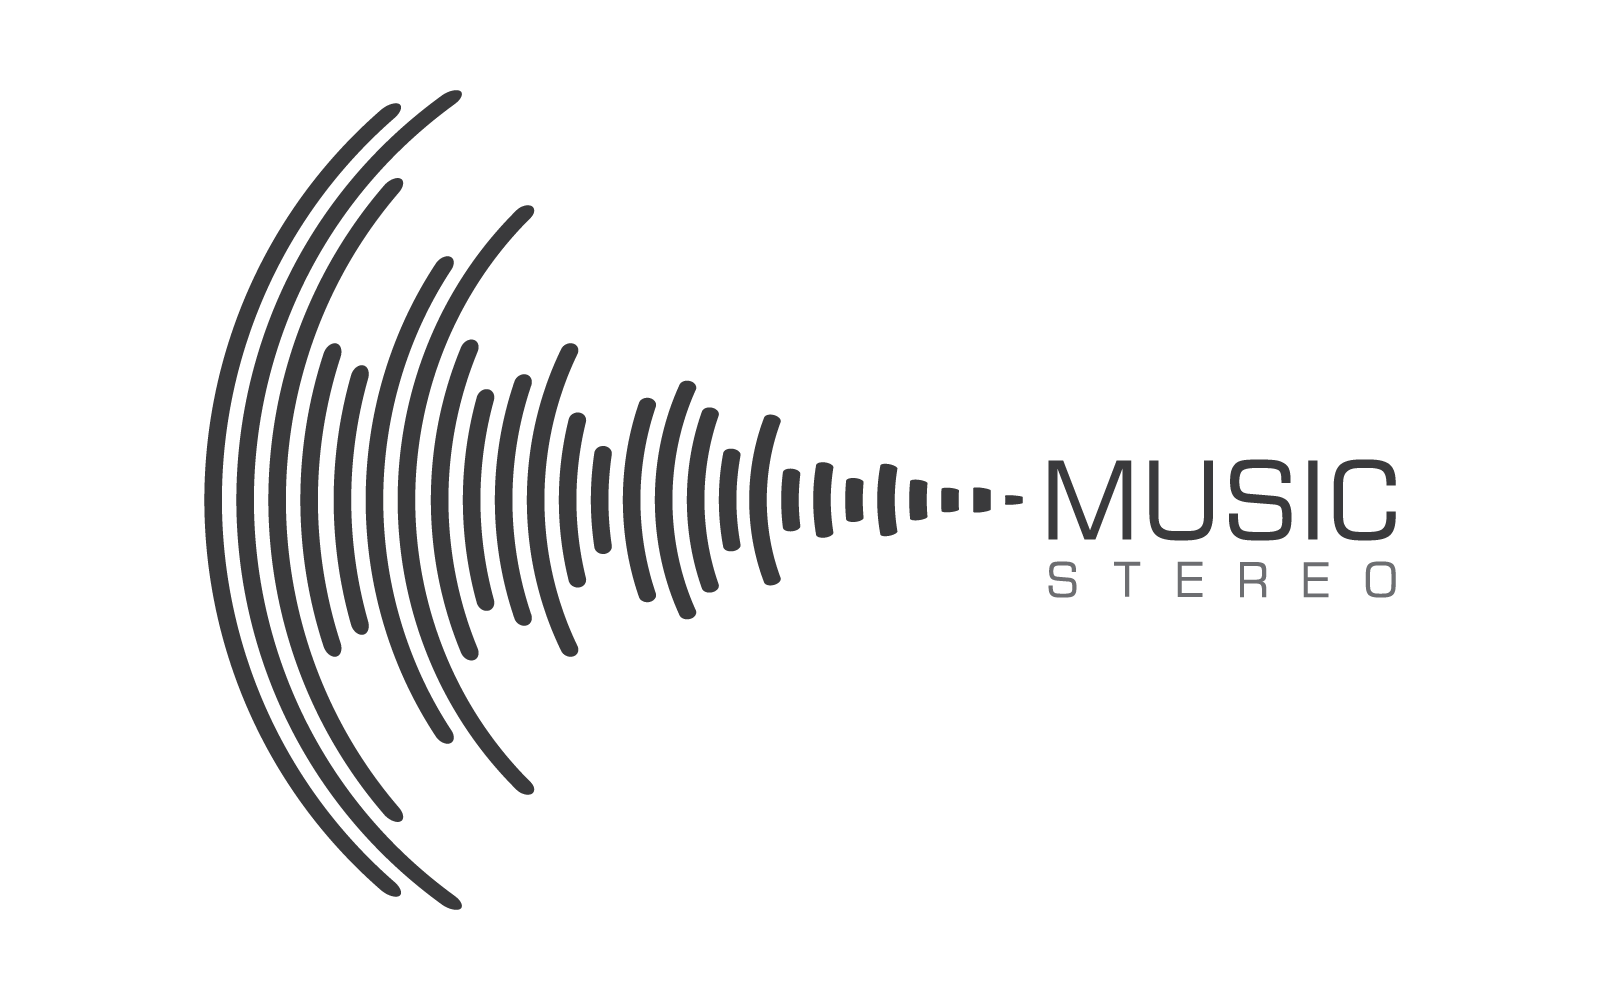 Sound wave music illustration template